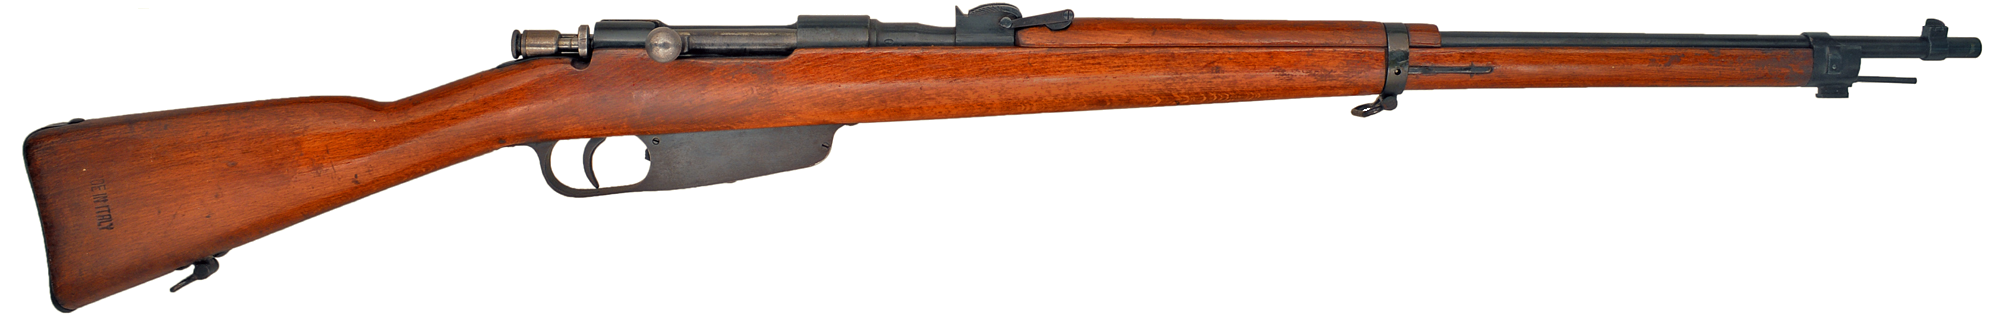 Italian-Rifle-Carcano-M1941-sides.png